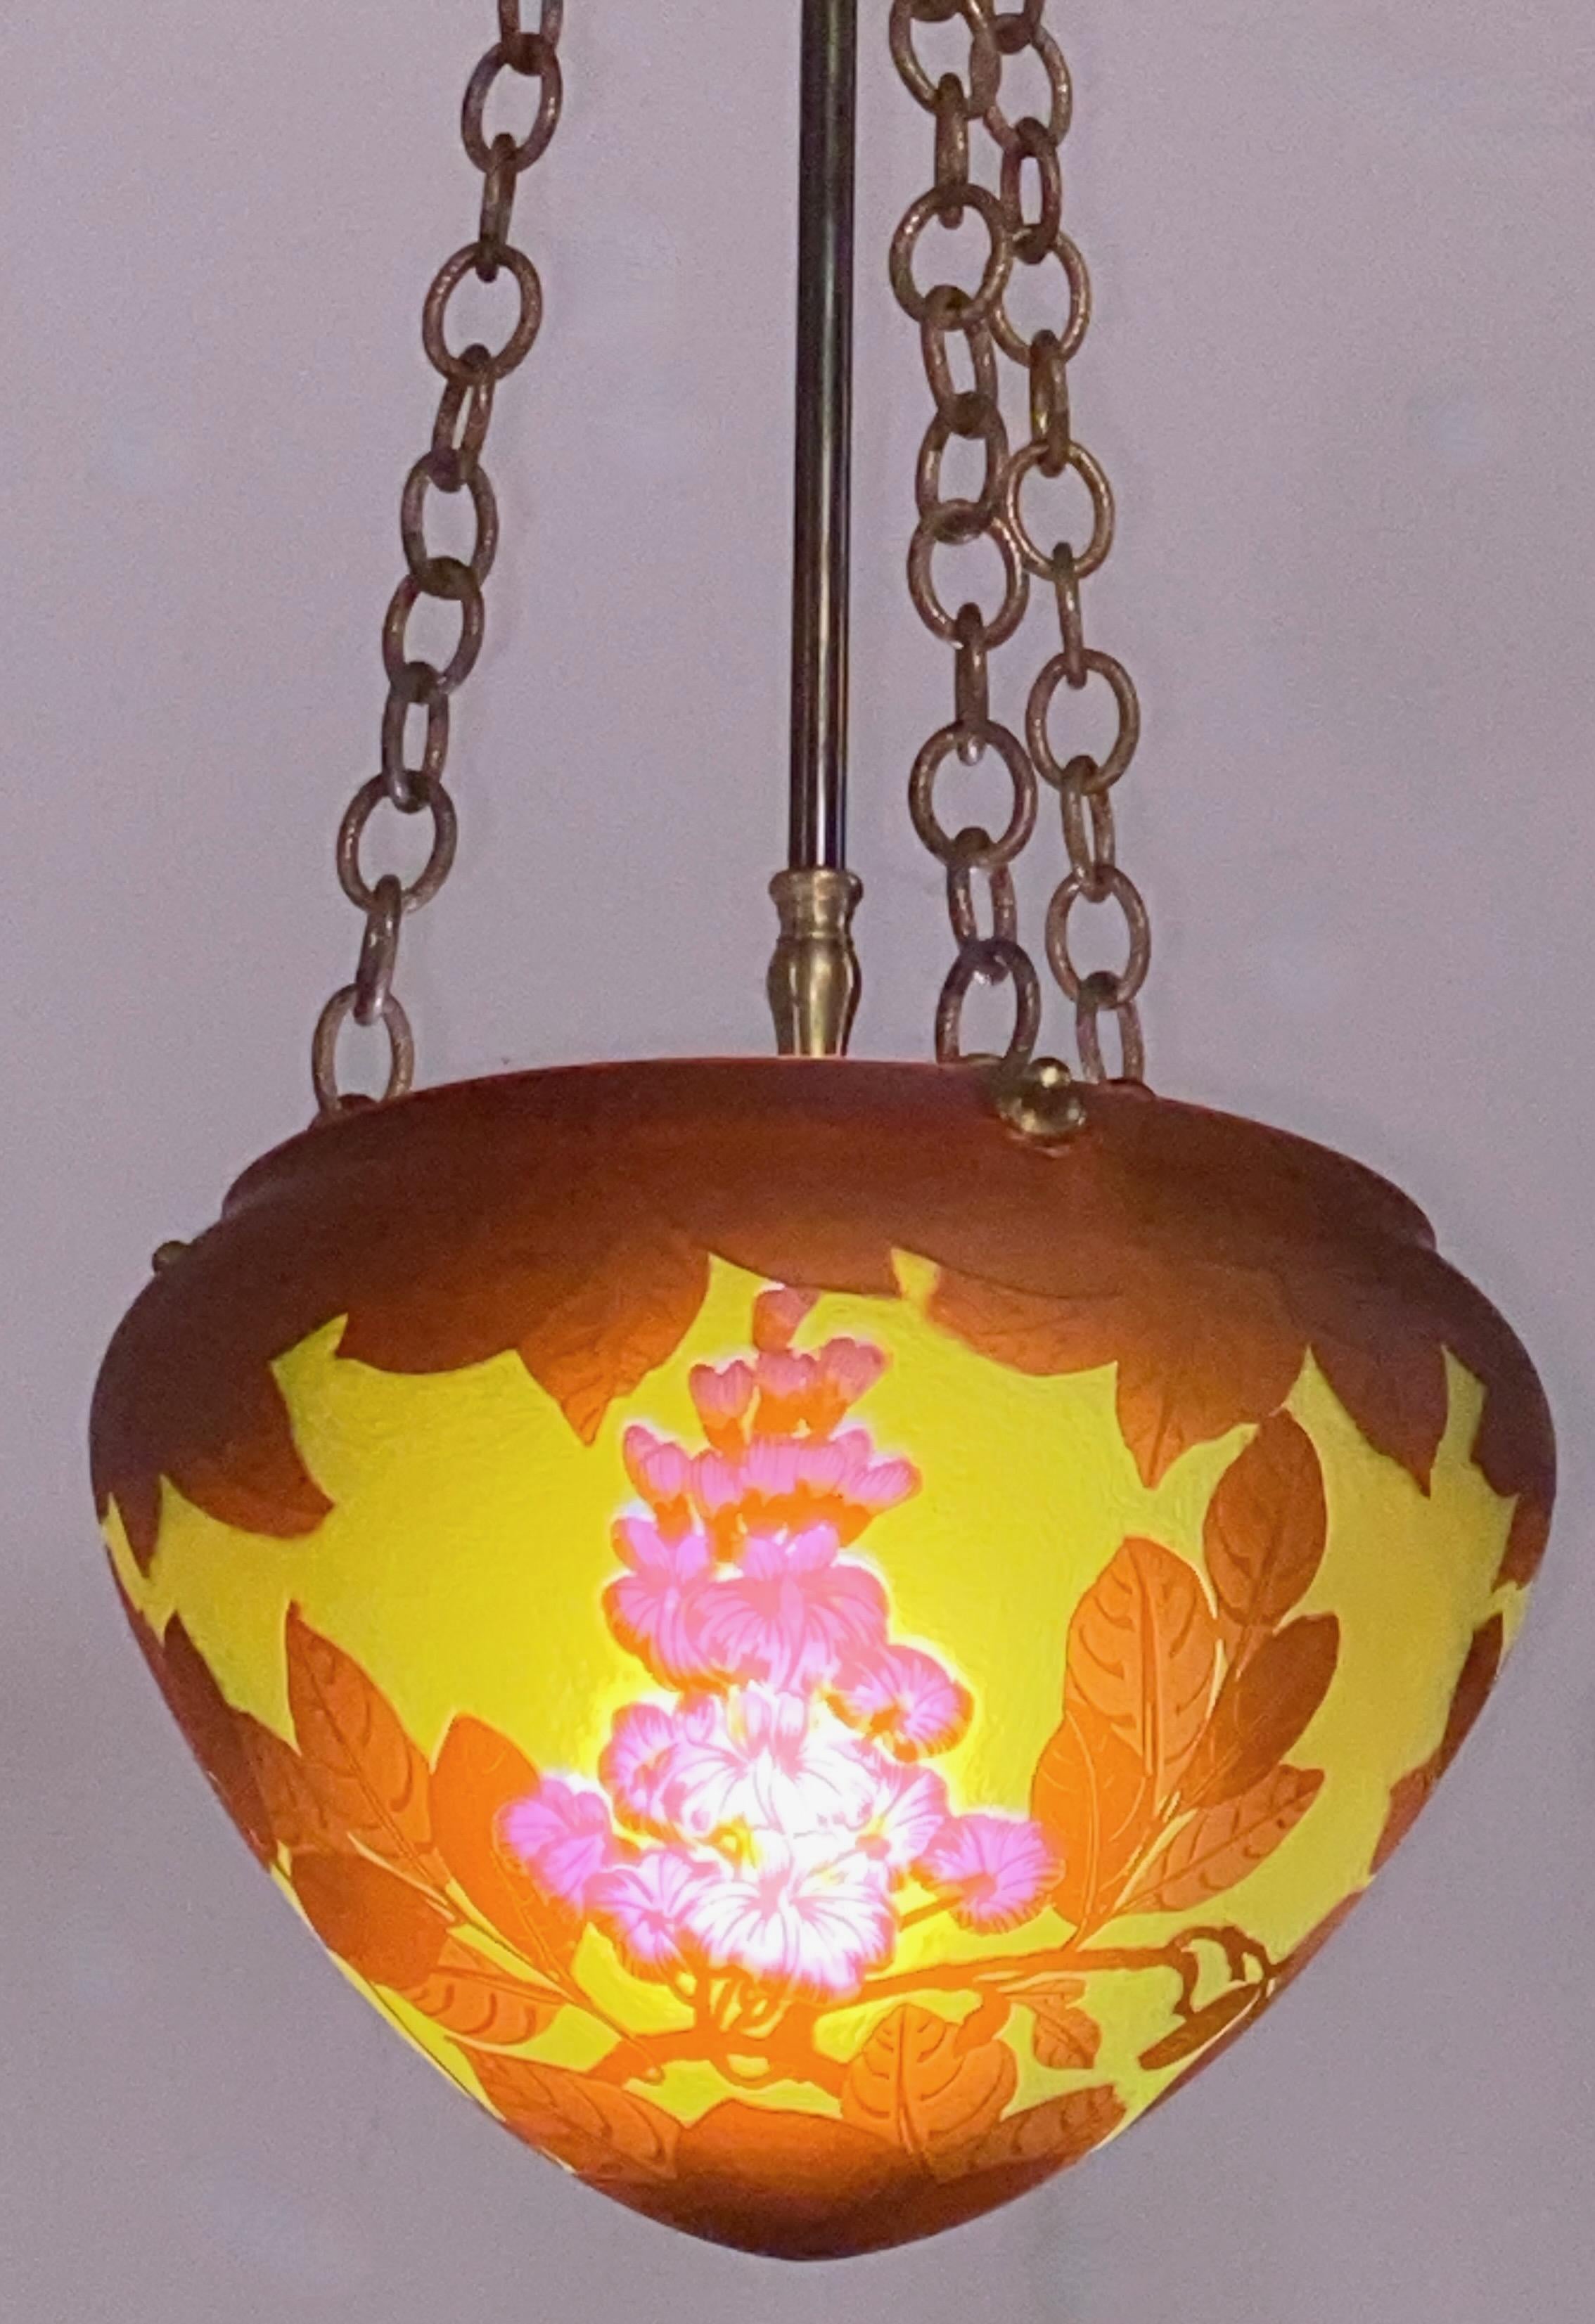 20th Century Art Nouveau French Cameo Glass Pendant Light Fixture For Sale